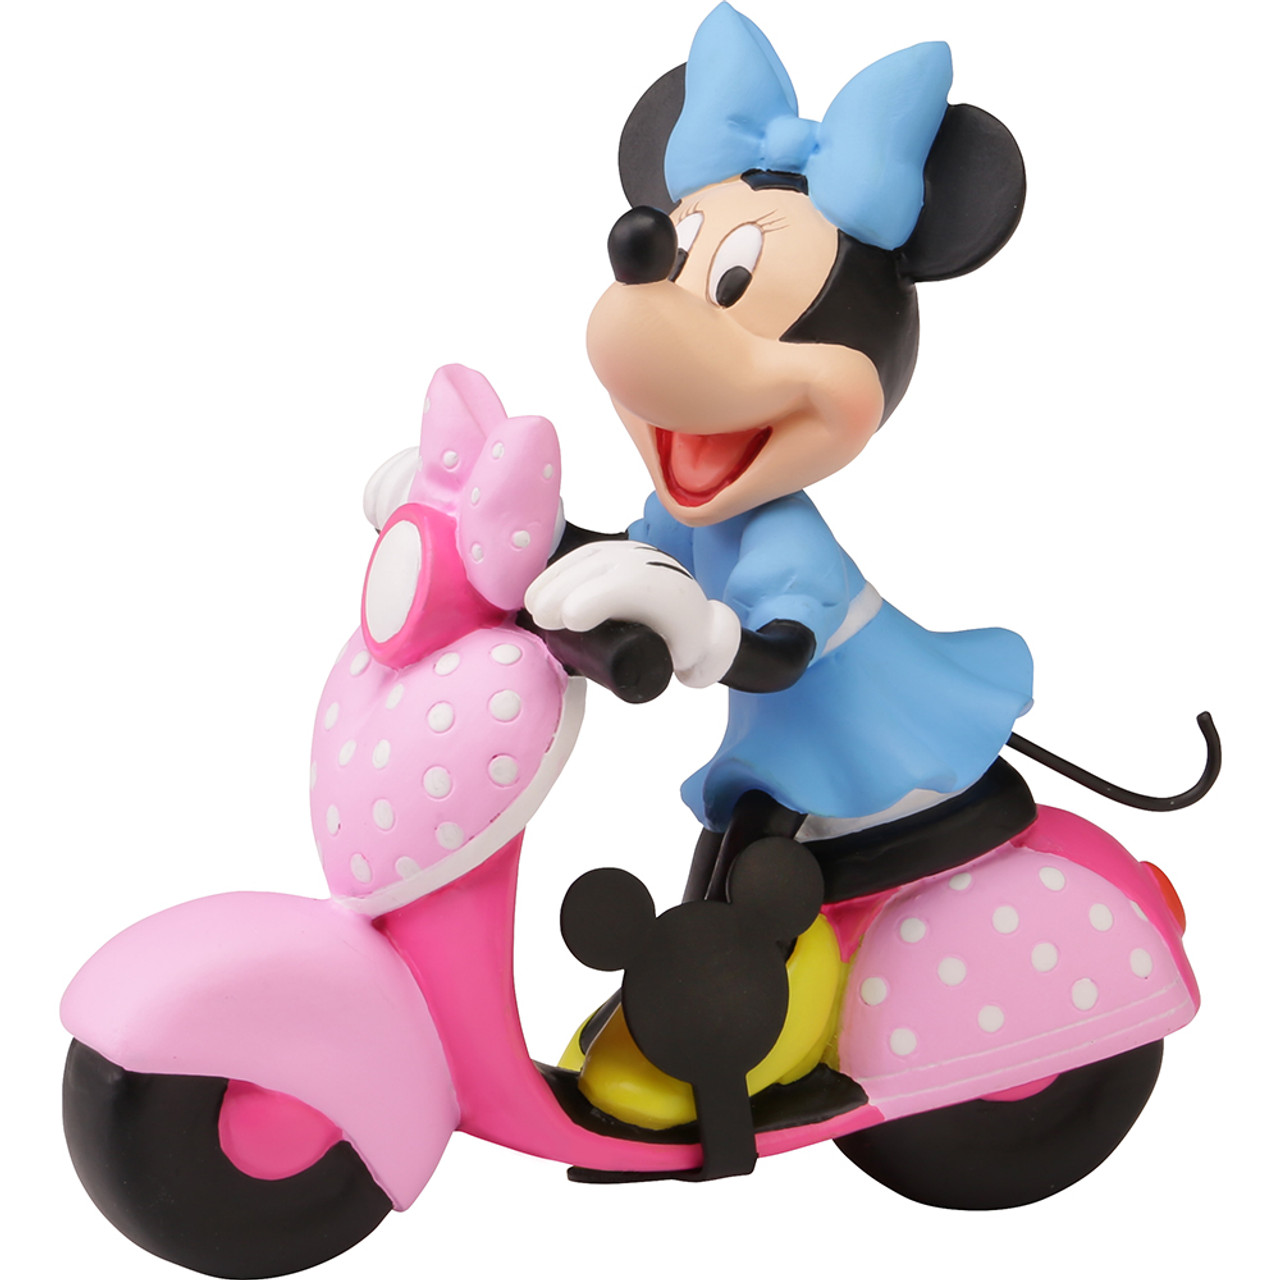 Precious Moments 201708 Disney Showcase Disney Collectible Parade Minnie  Mouse Resin/Vinyl Figurine